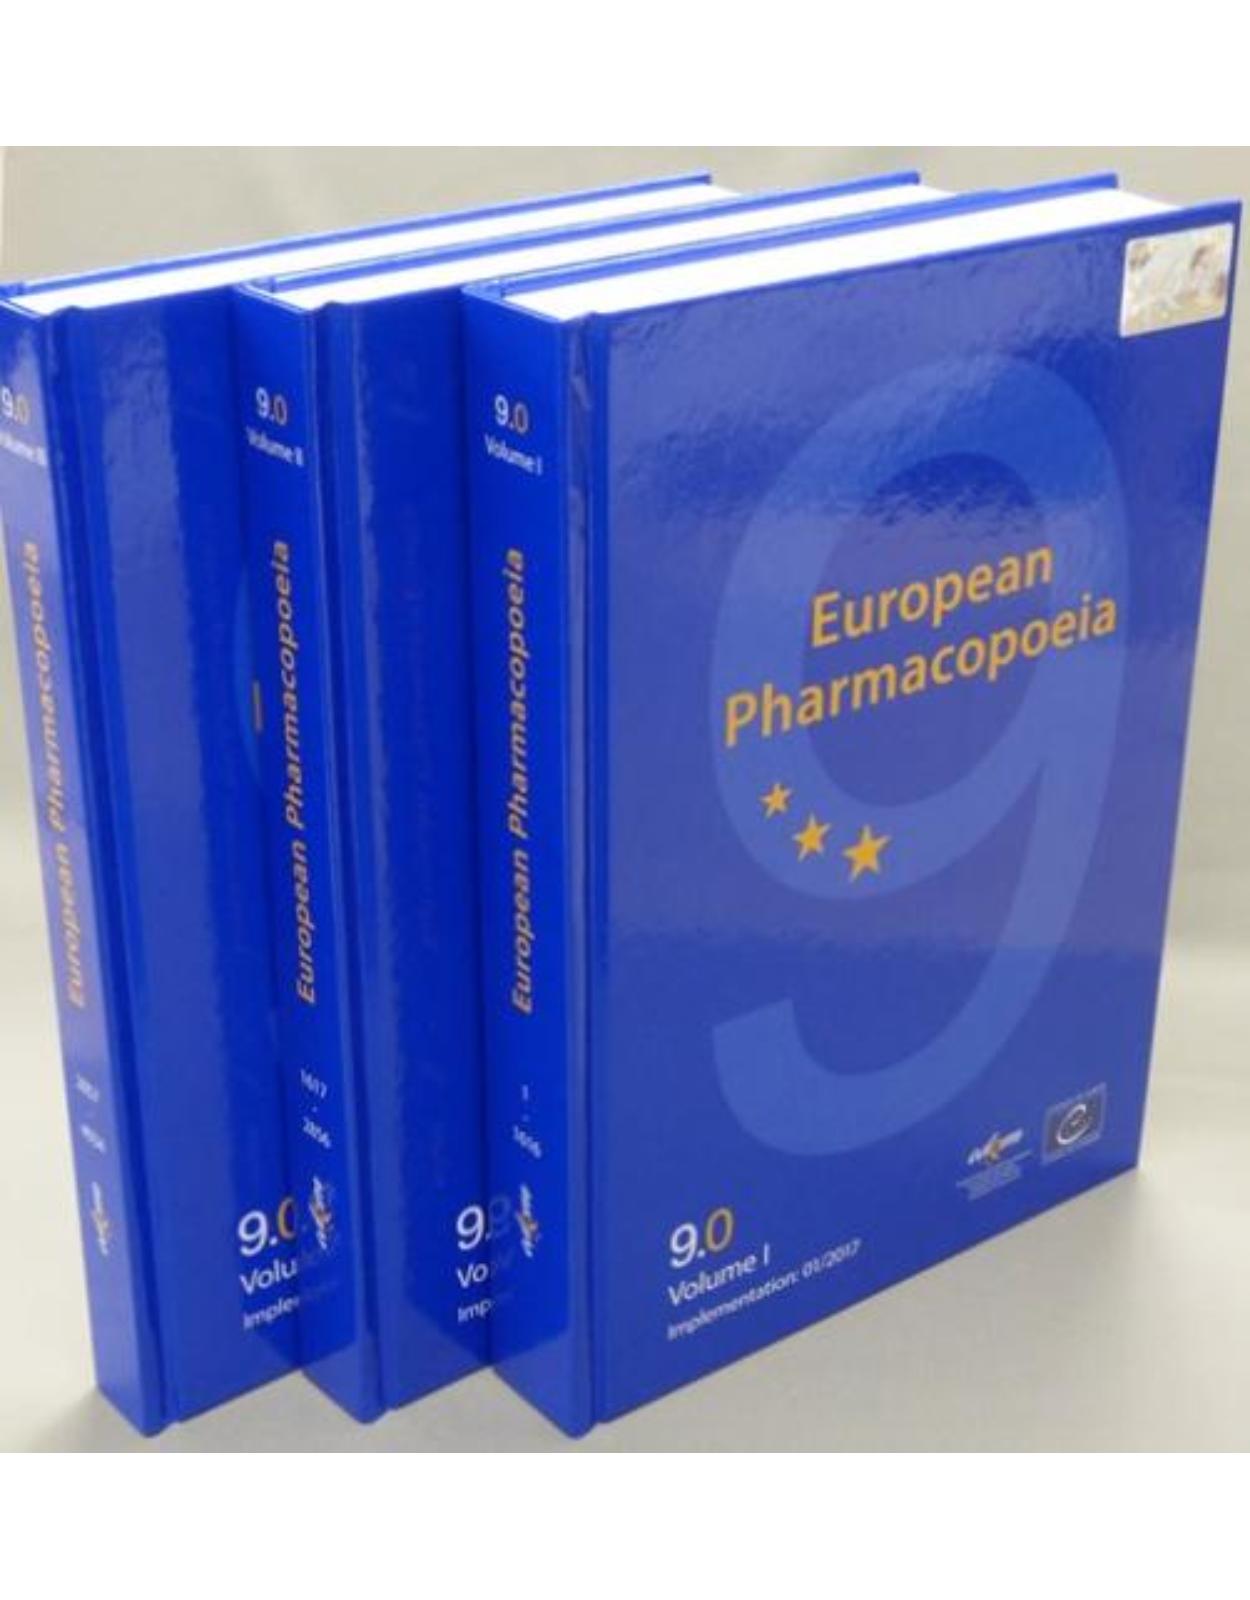 European Pharmacopoeia Supplements 9.3-9.5